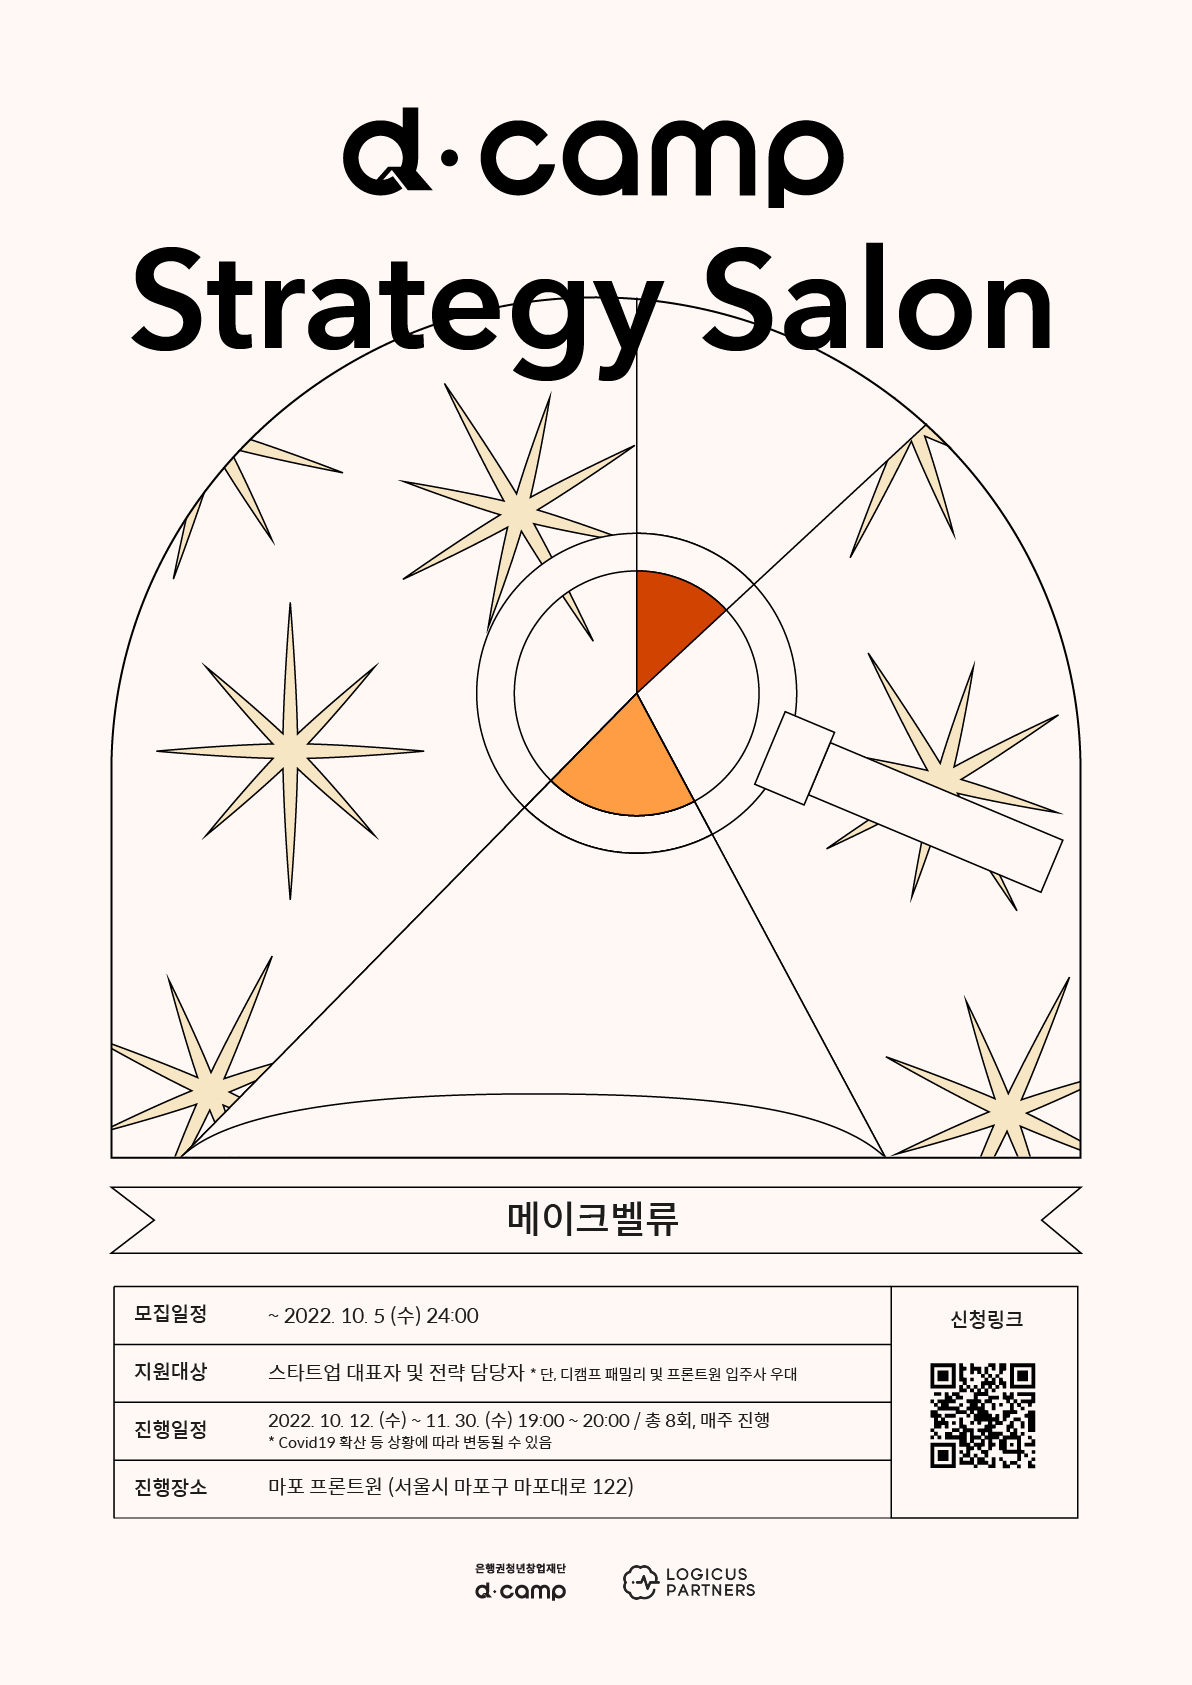 d.camp strategy salon